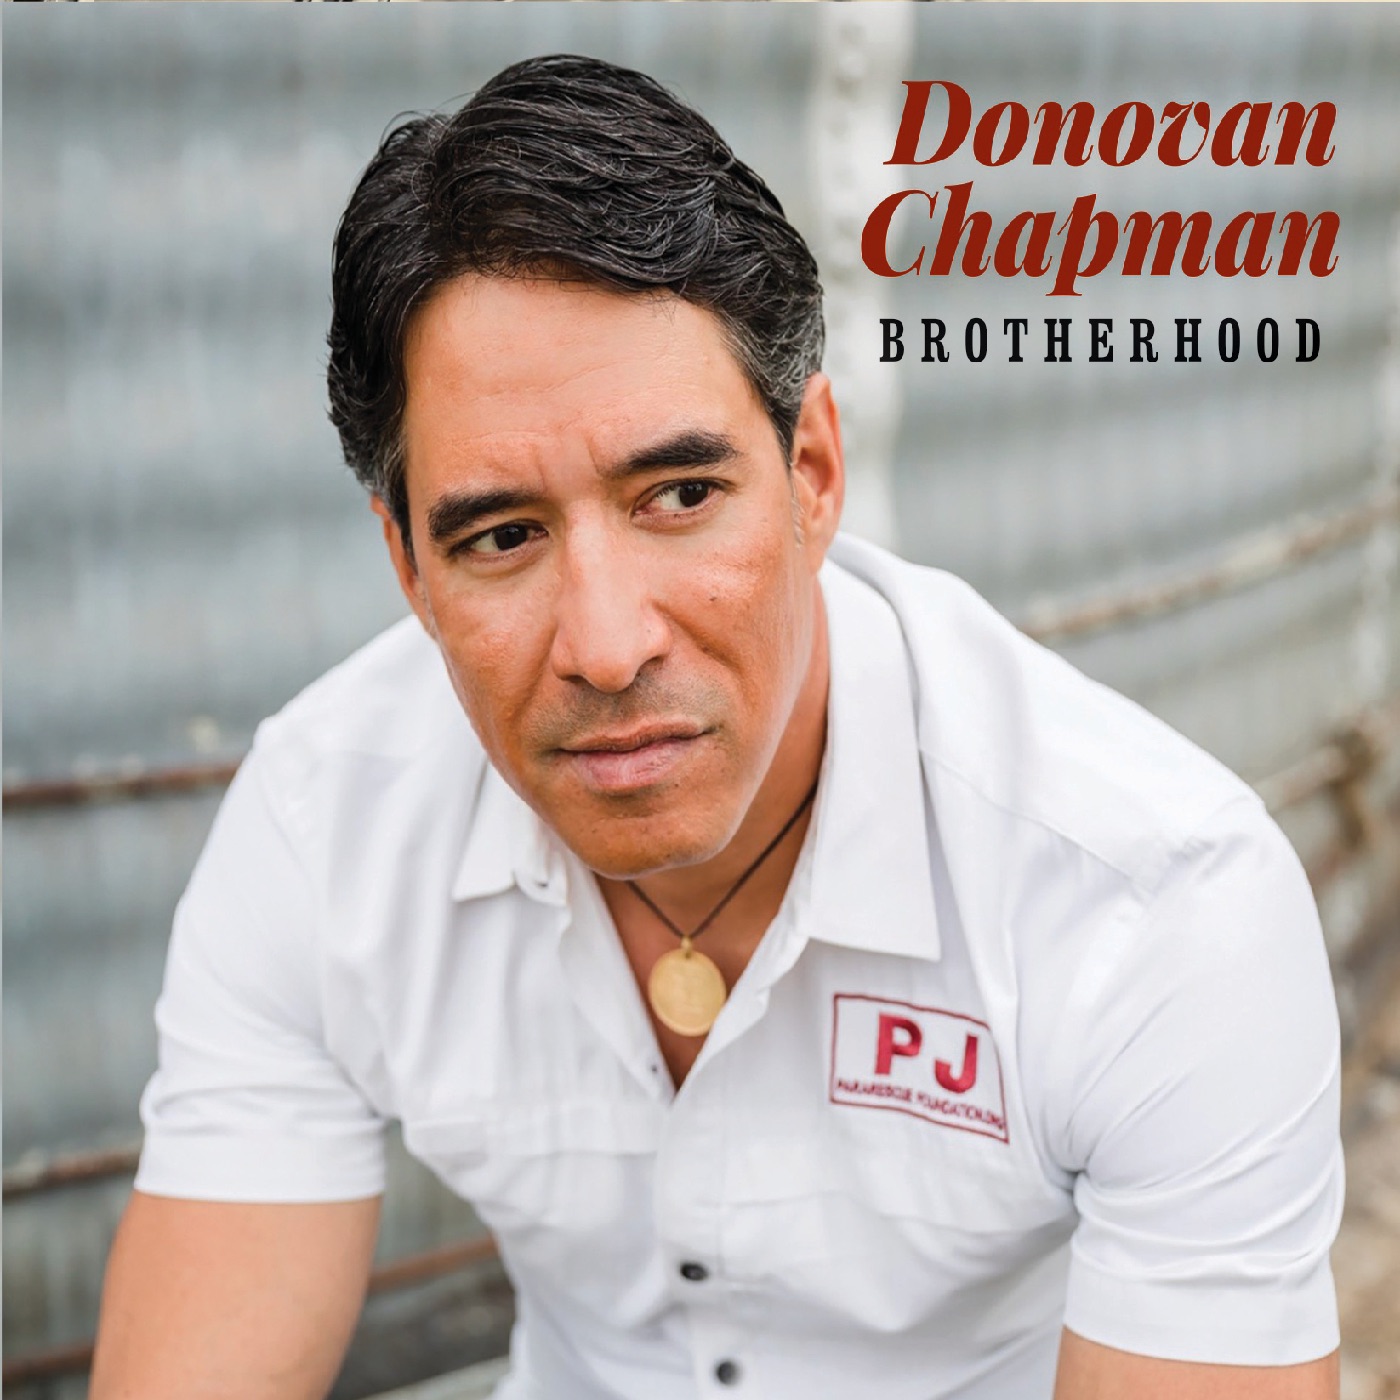 Donovan Chapman Brotherhood cover artwork